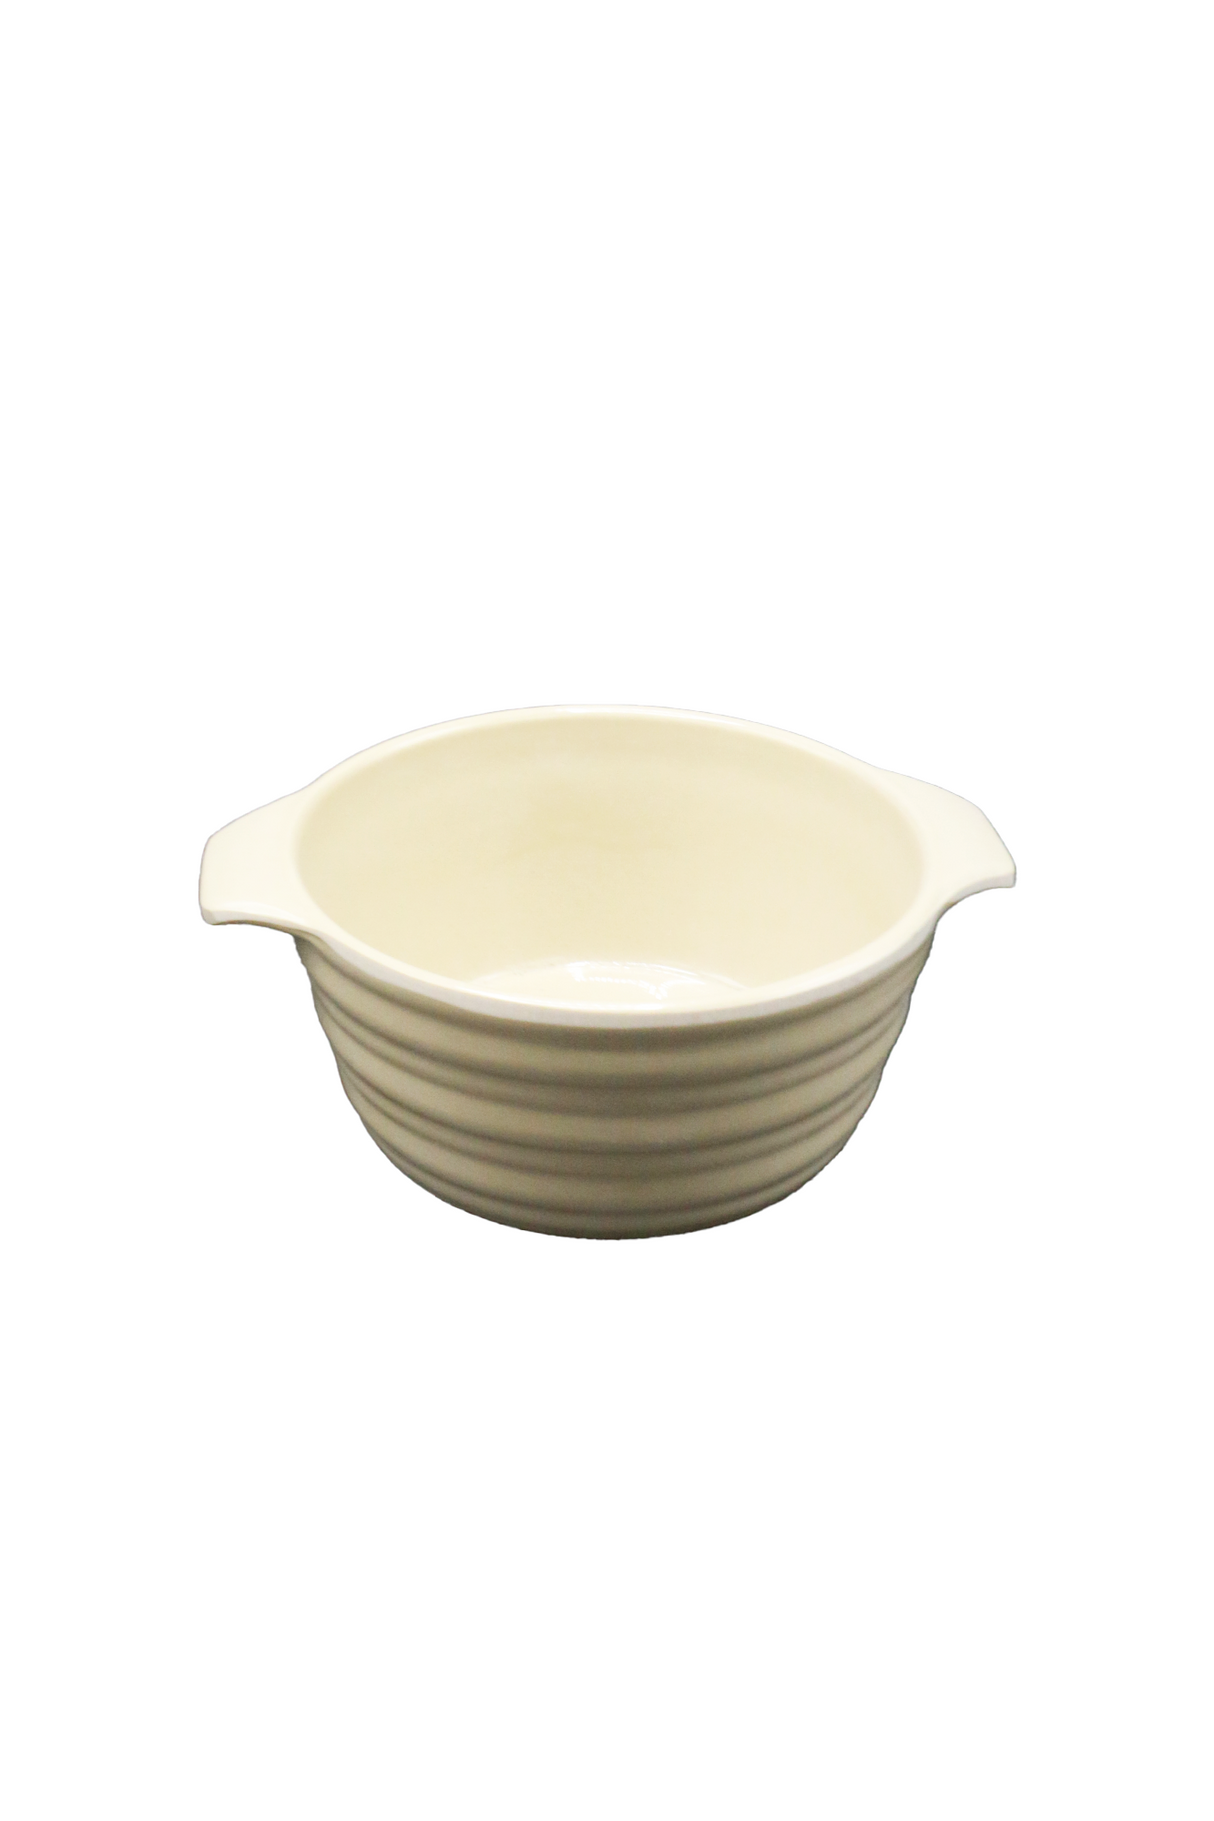 fn bowl 4.5" handle